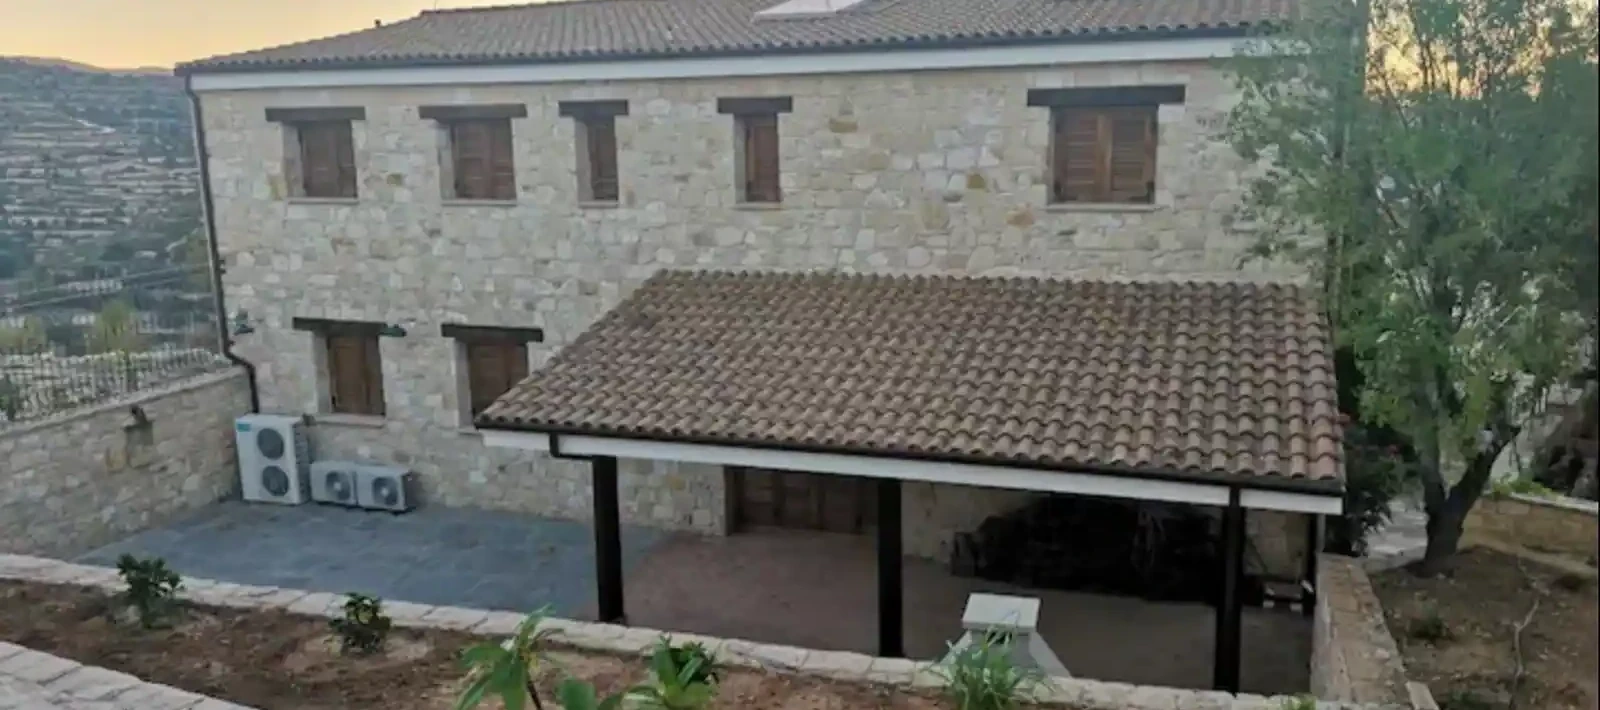 3-bedroom detached house to rent €2.500, image 1